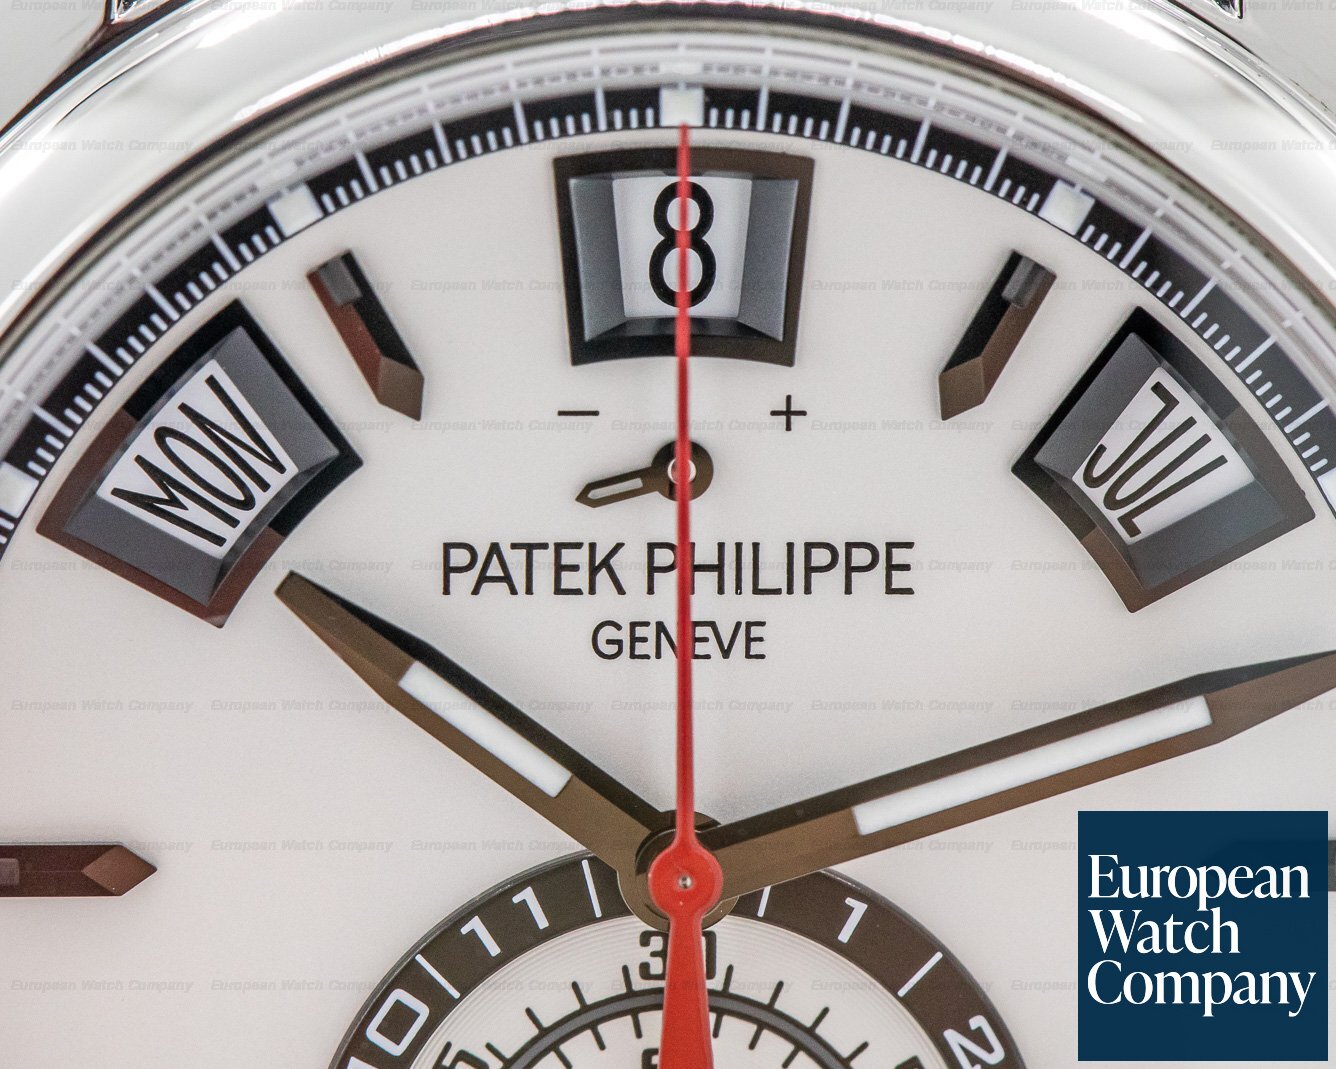 Patek Philippe Annual Calendar Chronograph SS / SS FULL SET Ref. 5960/1A-001